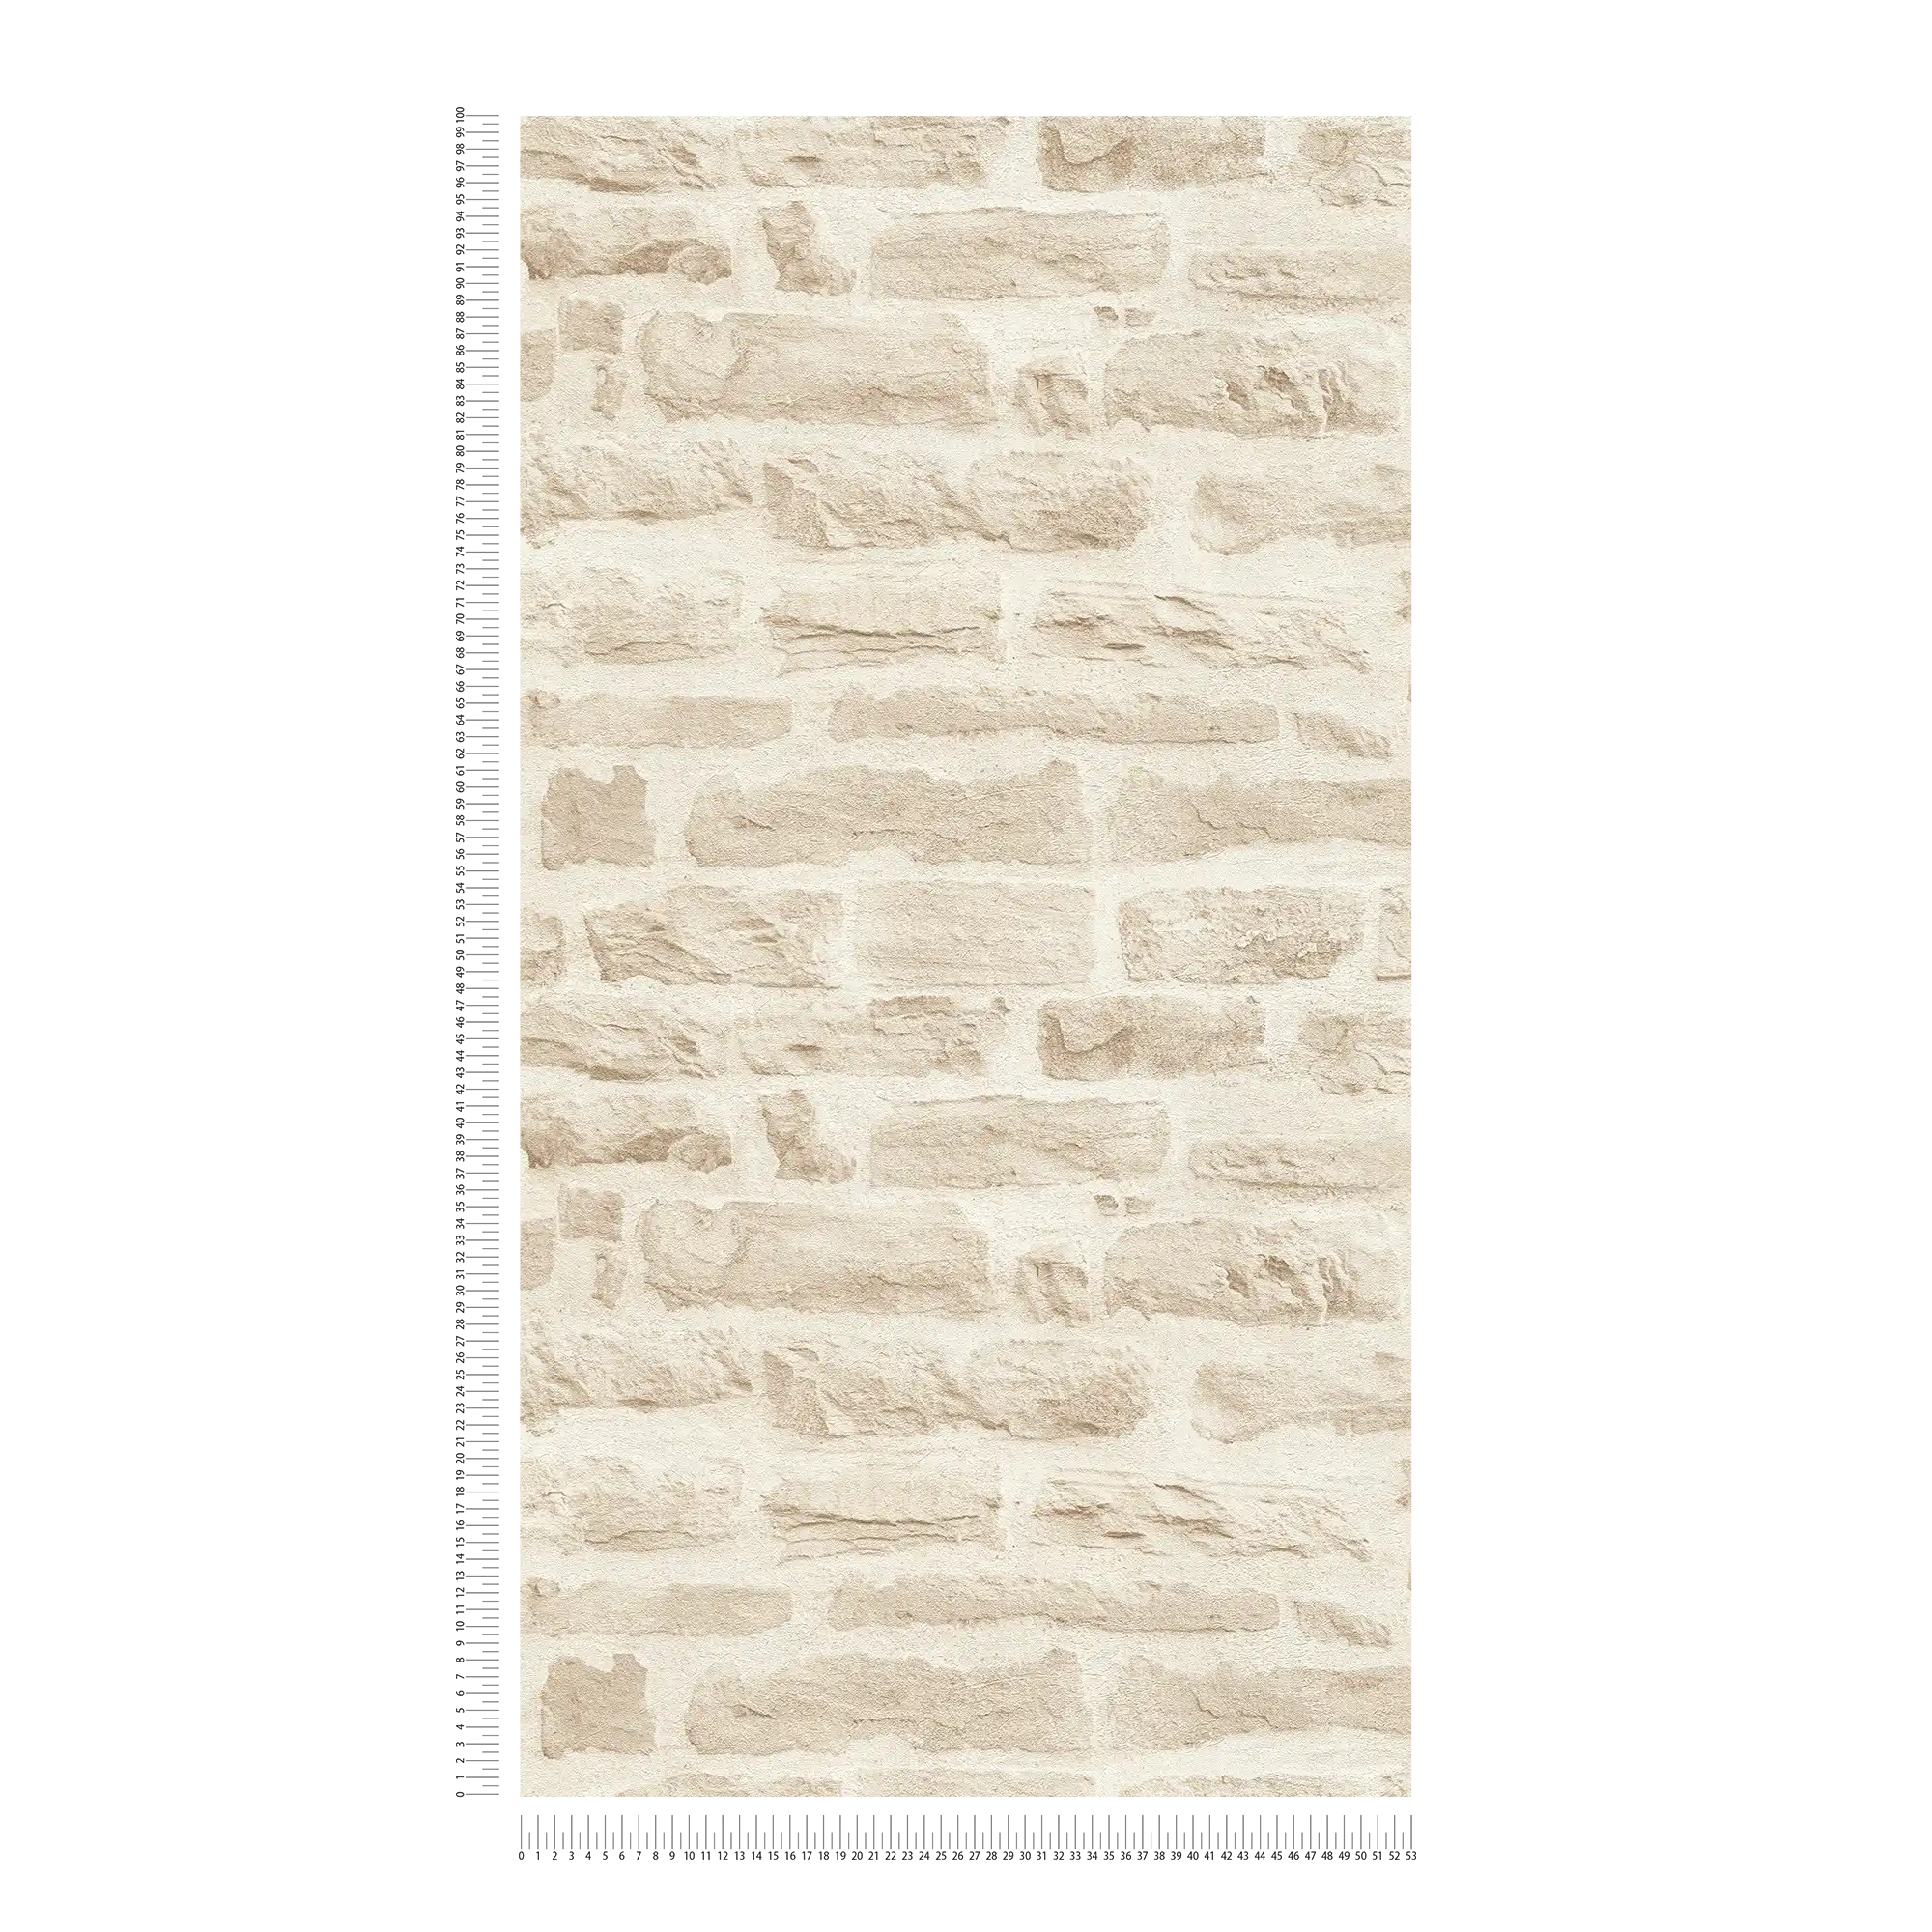             Light non-woven wallpaper natural stone with wall design - beige, cream
        